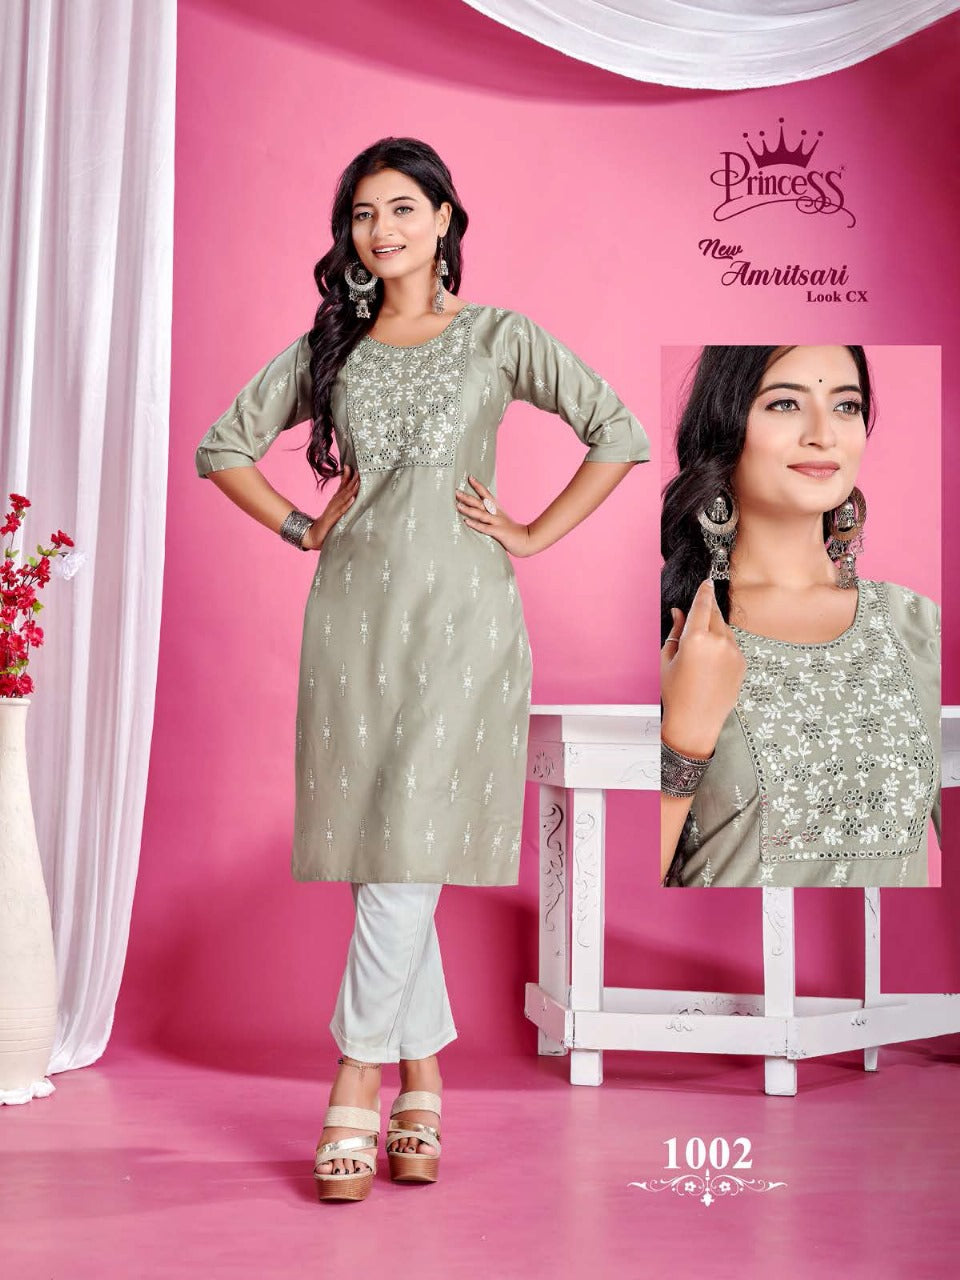 New Amritsari Look Cx Princess Creation Heavy Rayon Knee Length Kurtis